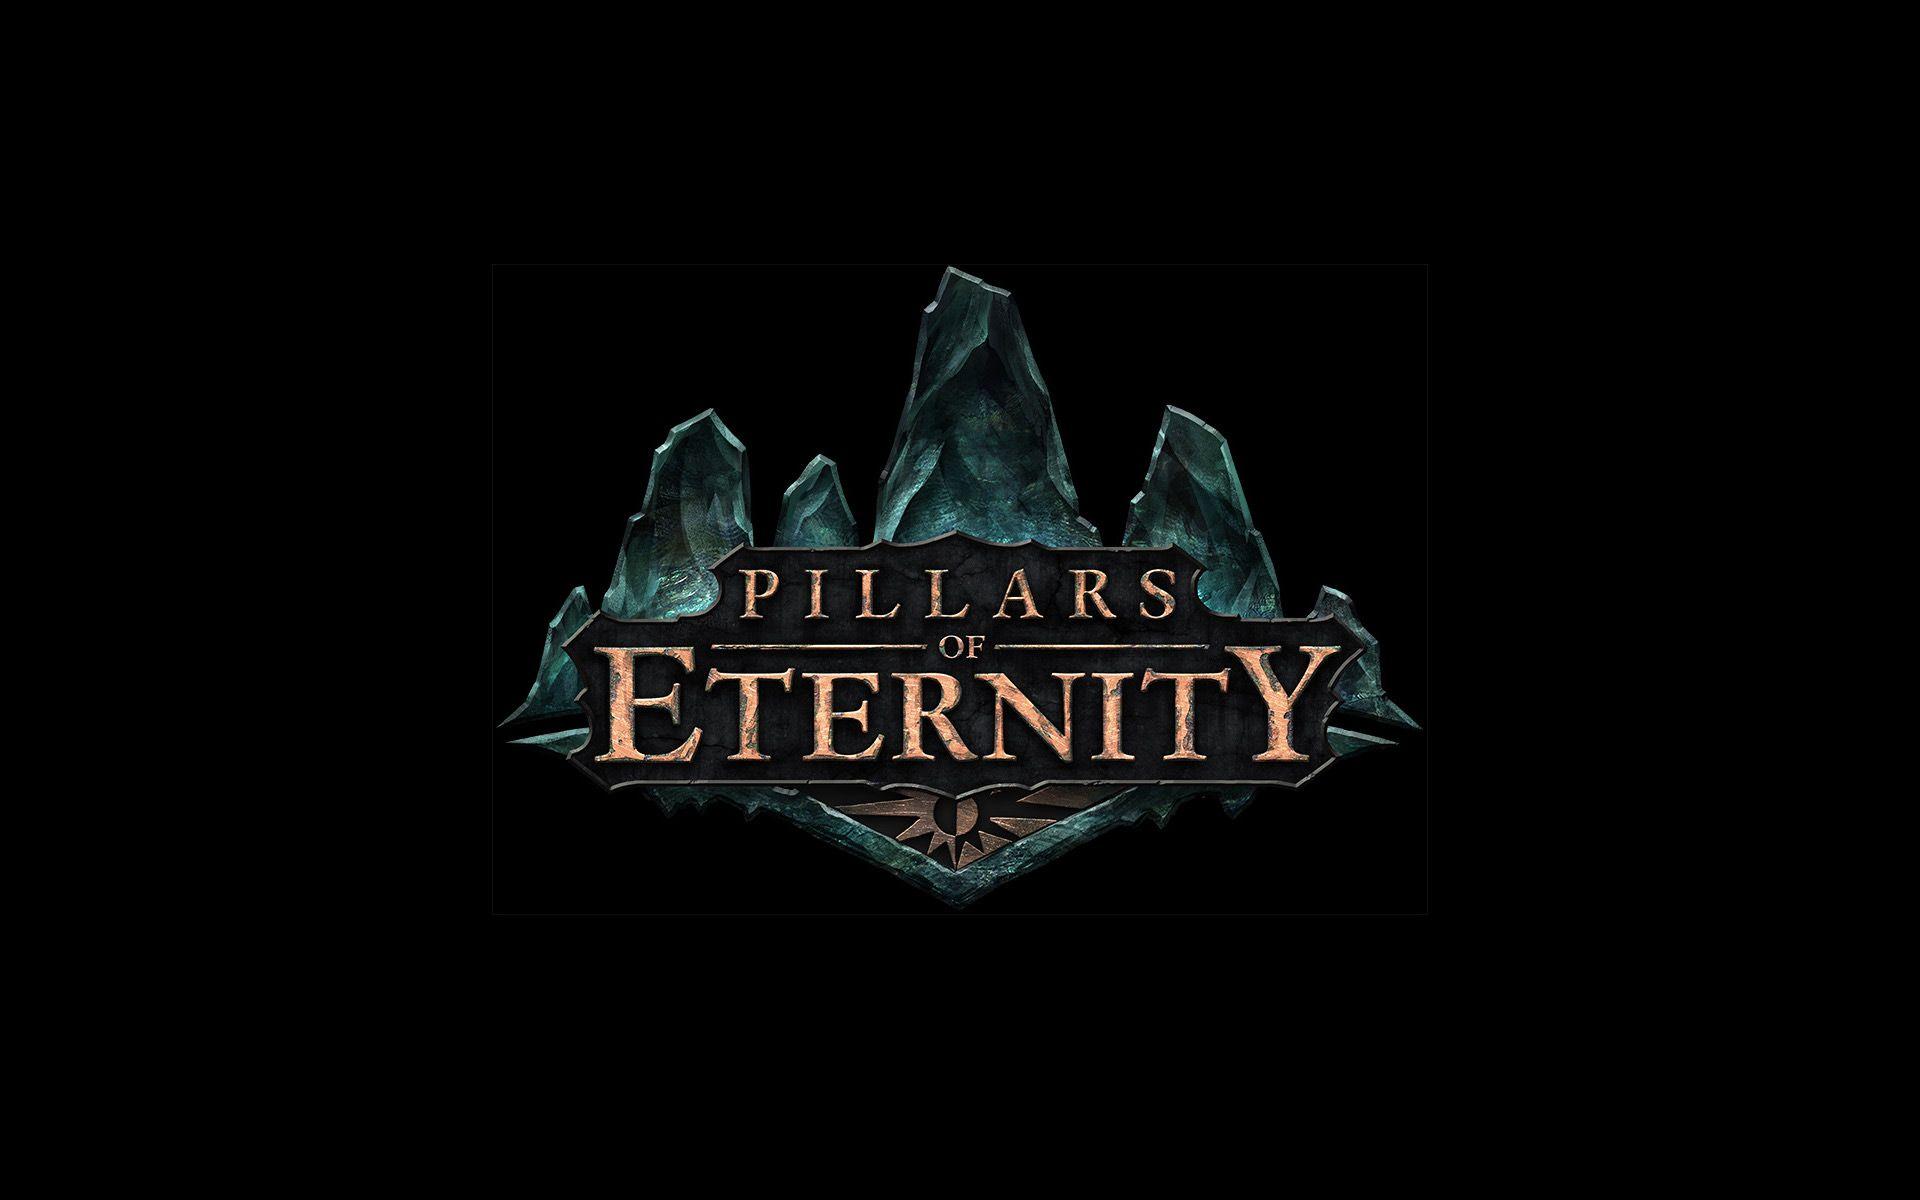 Pillars Of Eternity Wallpaper, Picture, Image